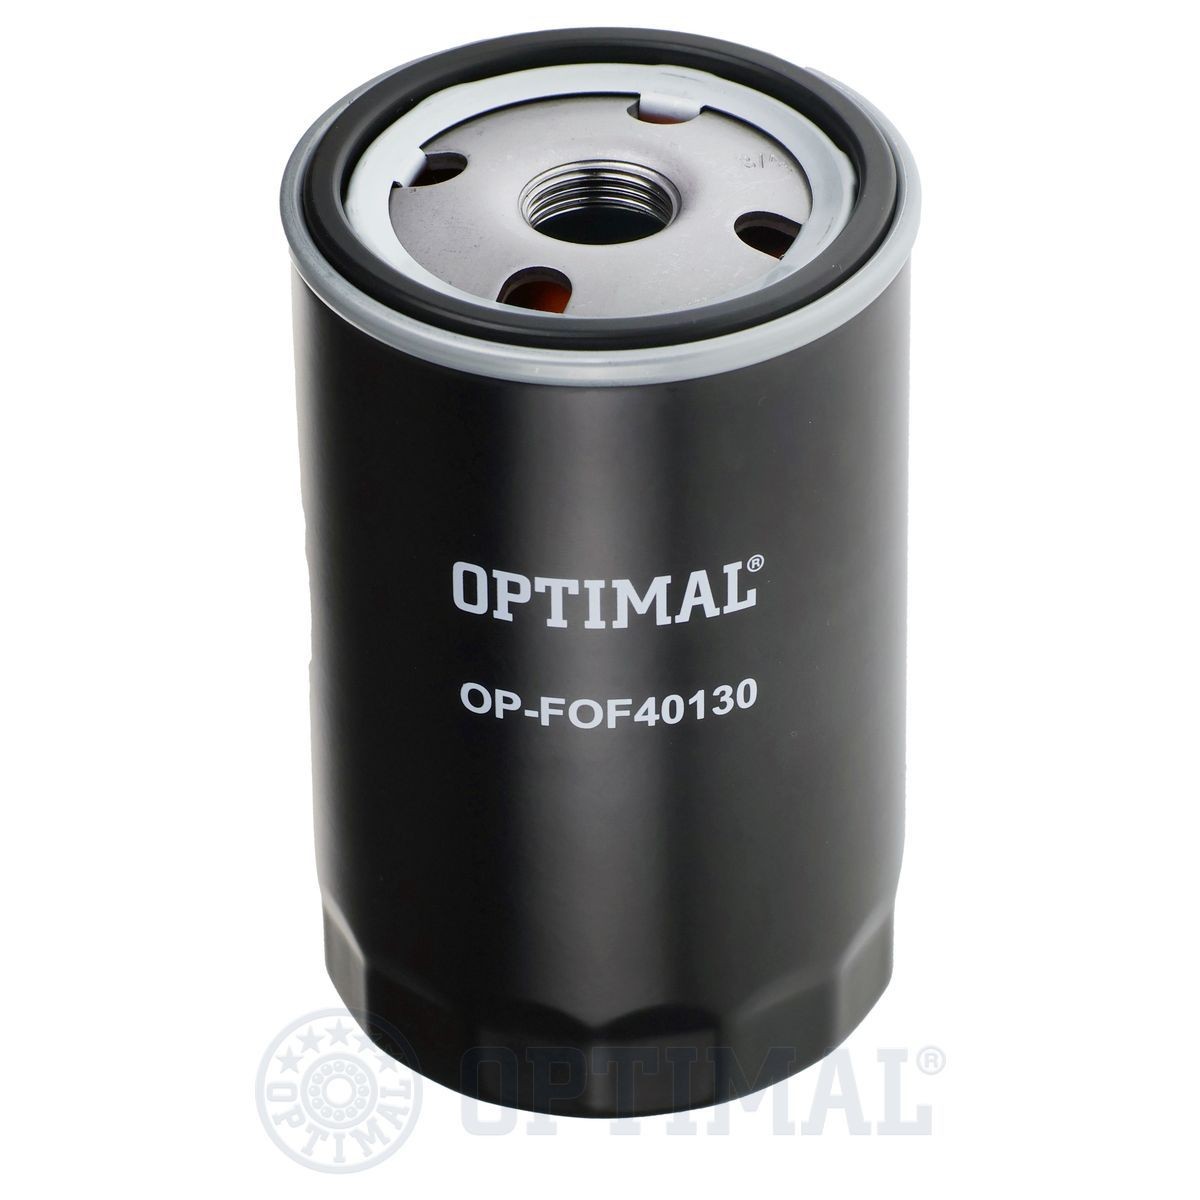 OPTIMAL OP-FOF40130 Oil filter 1021840101